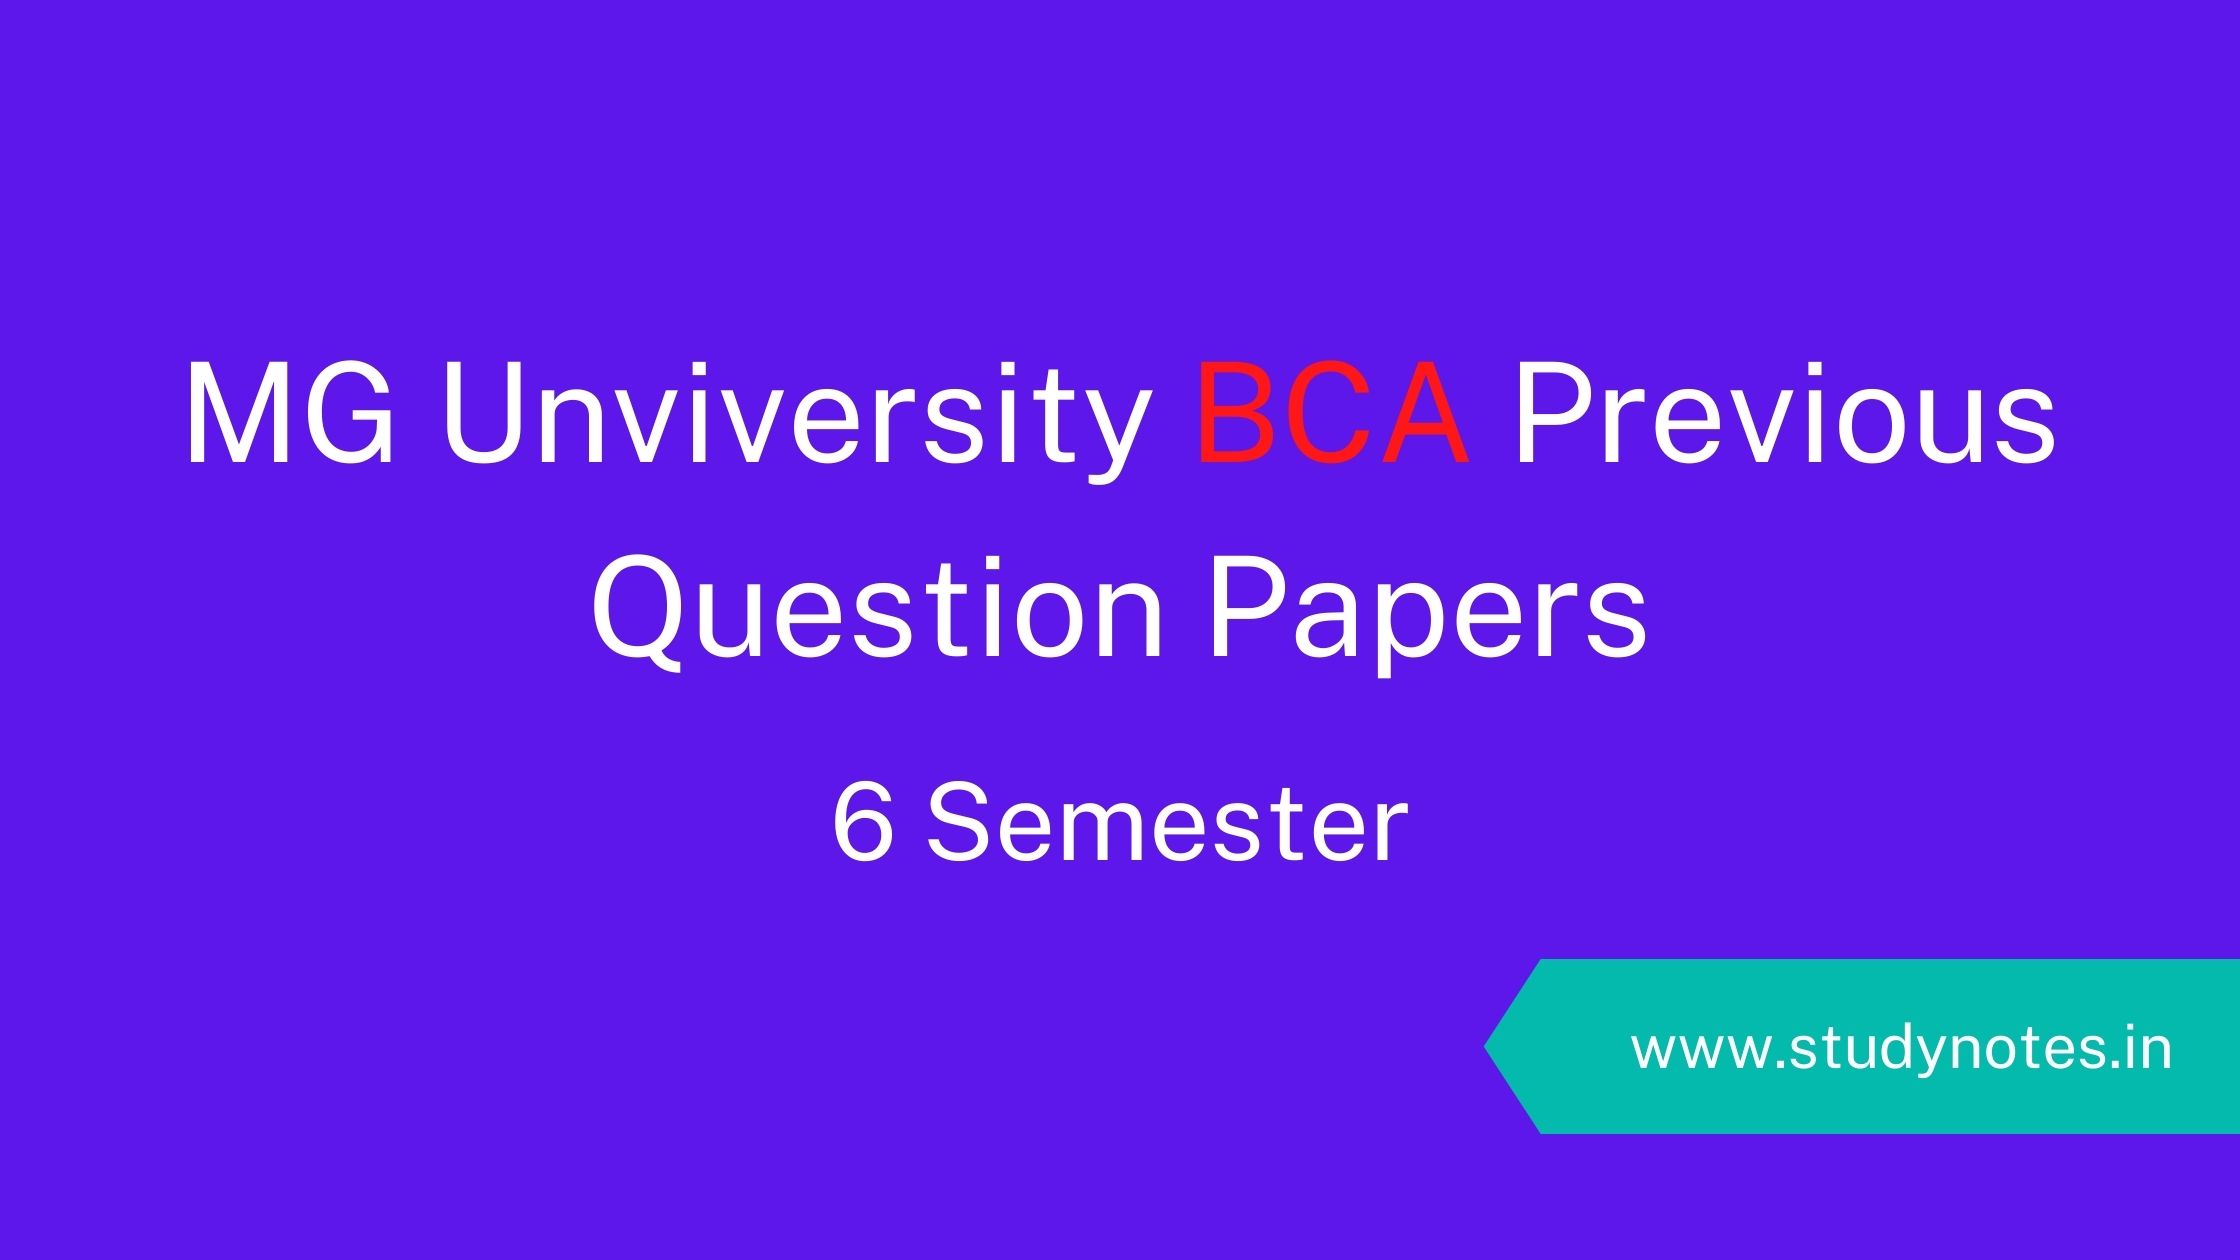 Sixth Semester BCA Previous Question Paper of MG University